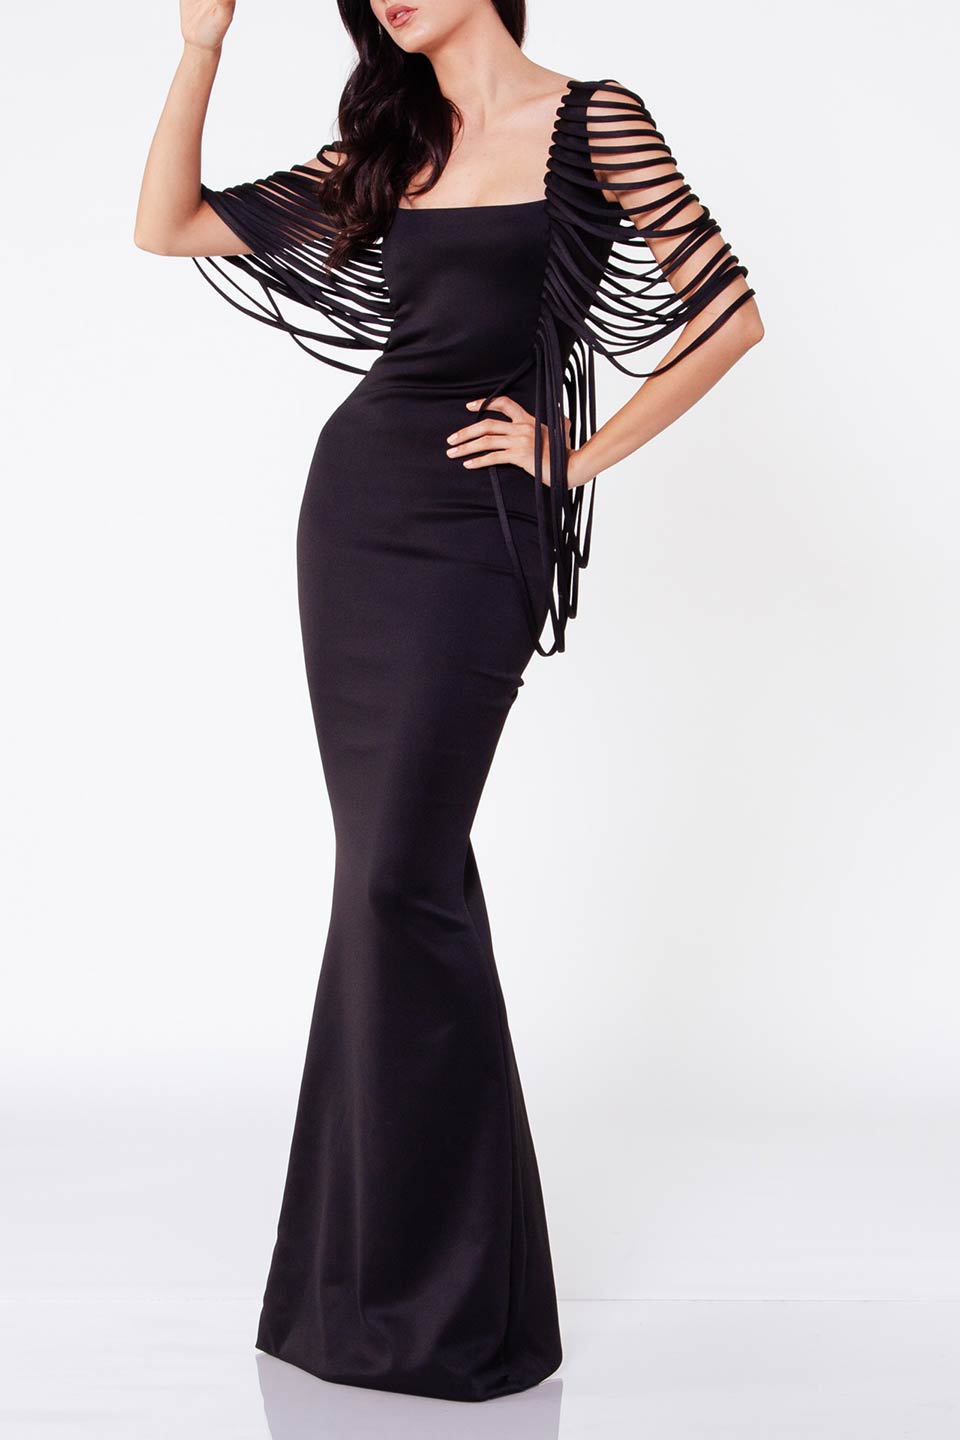 Thumbnail for Product gallery 6, Hamel Fashion designer black maxi dress with fringe sleeves.